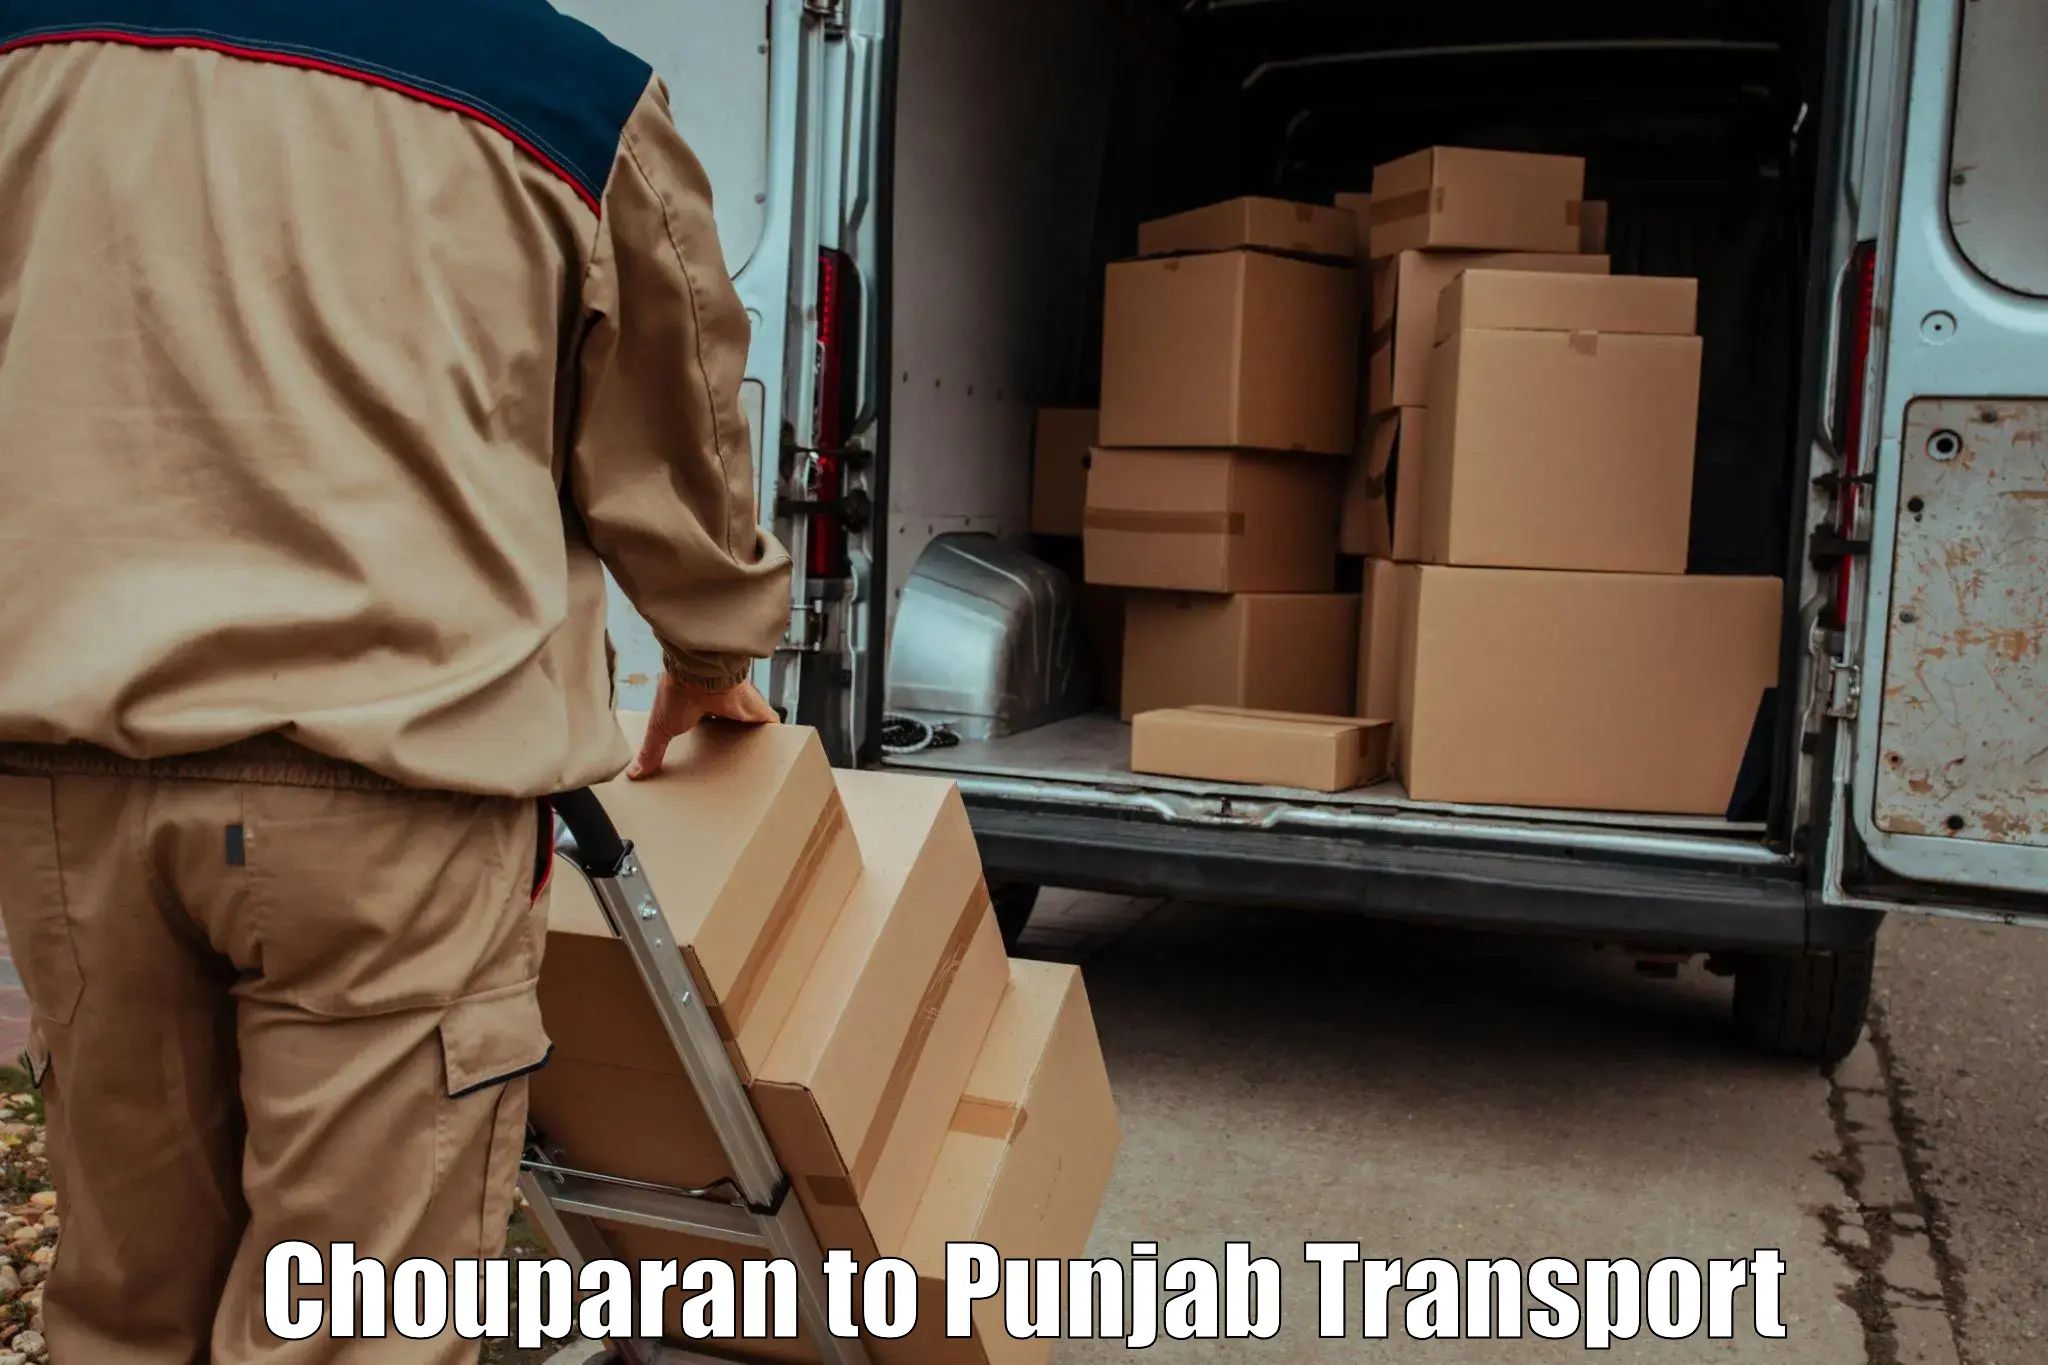 Pick up transport service Chouparan to Faridkot